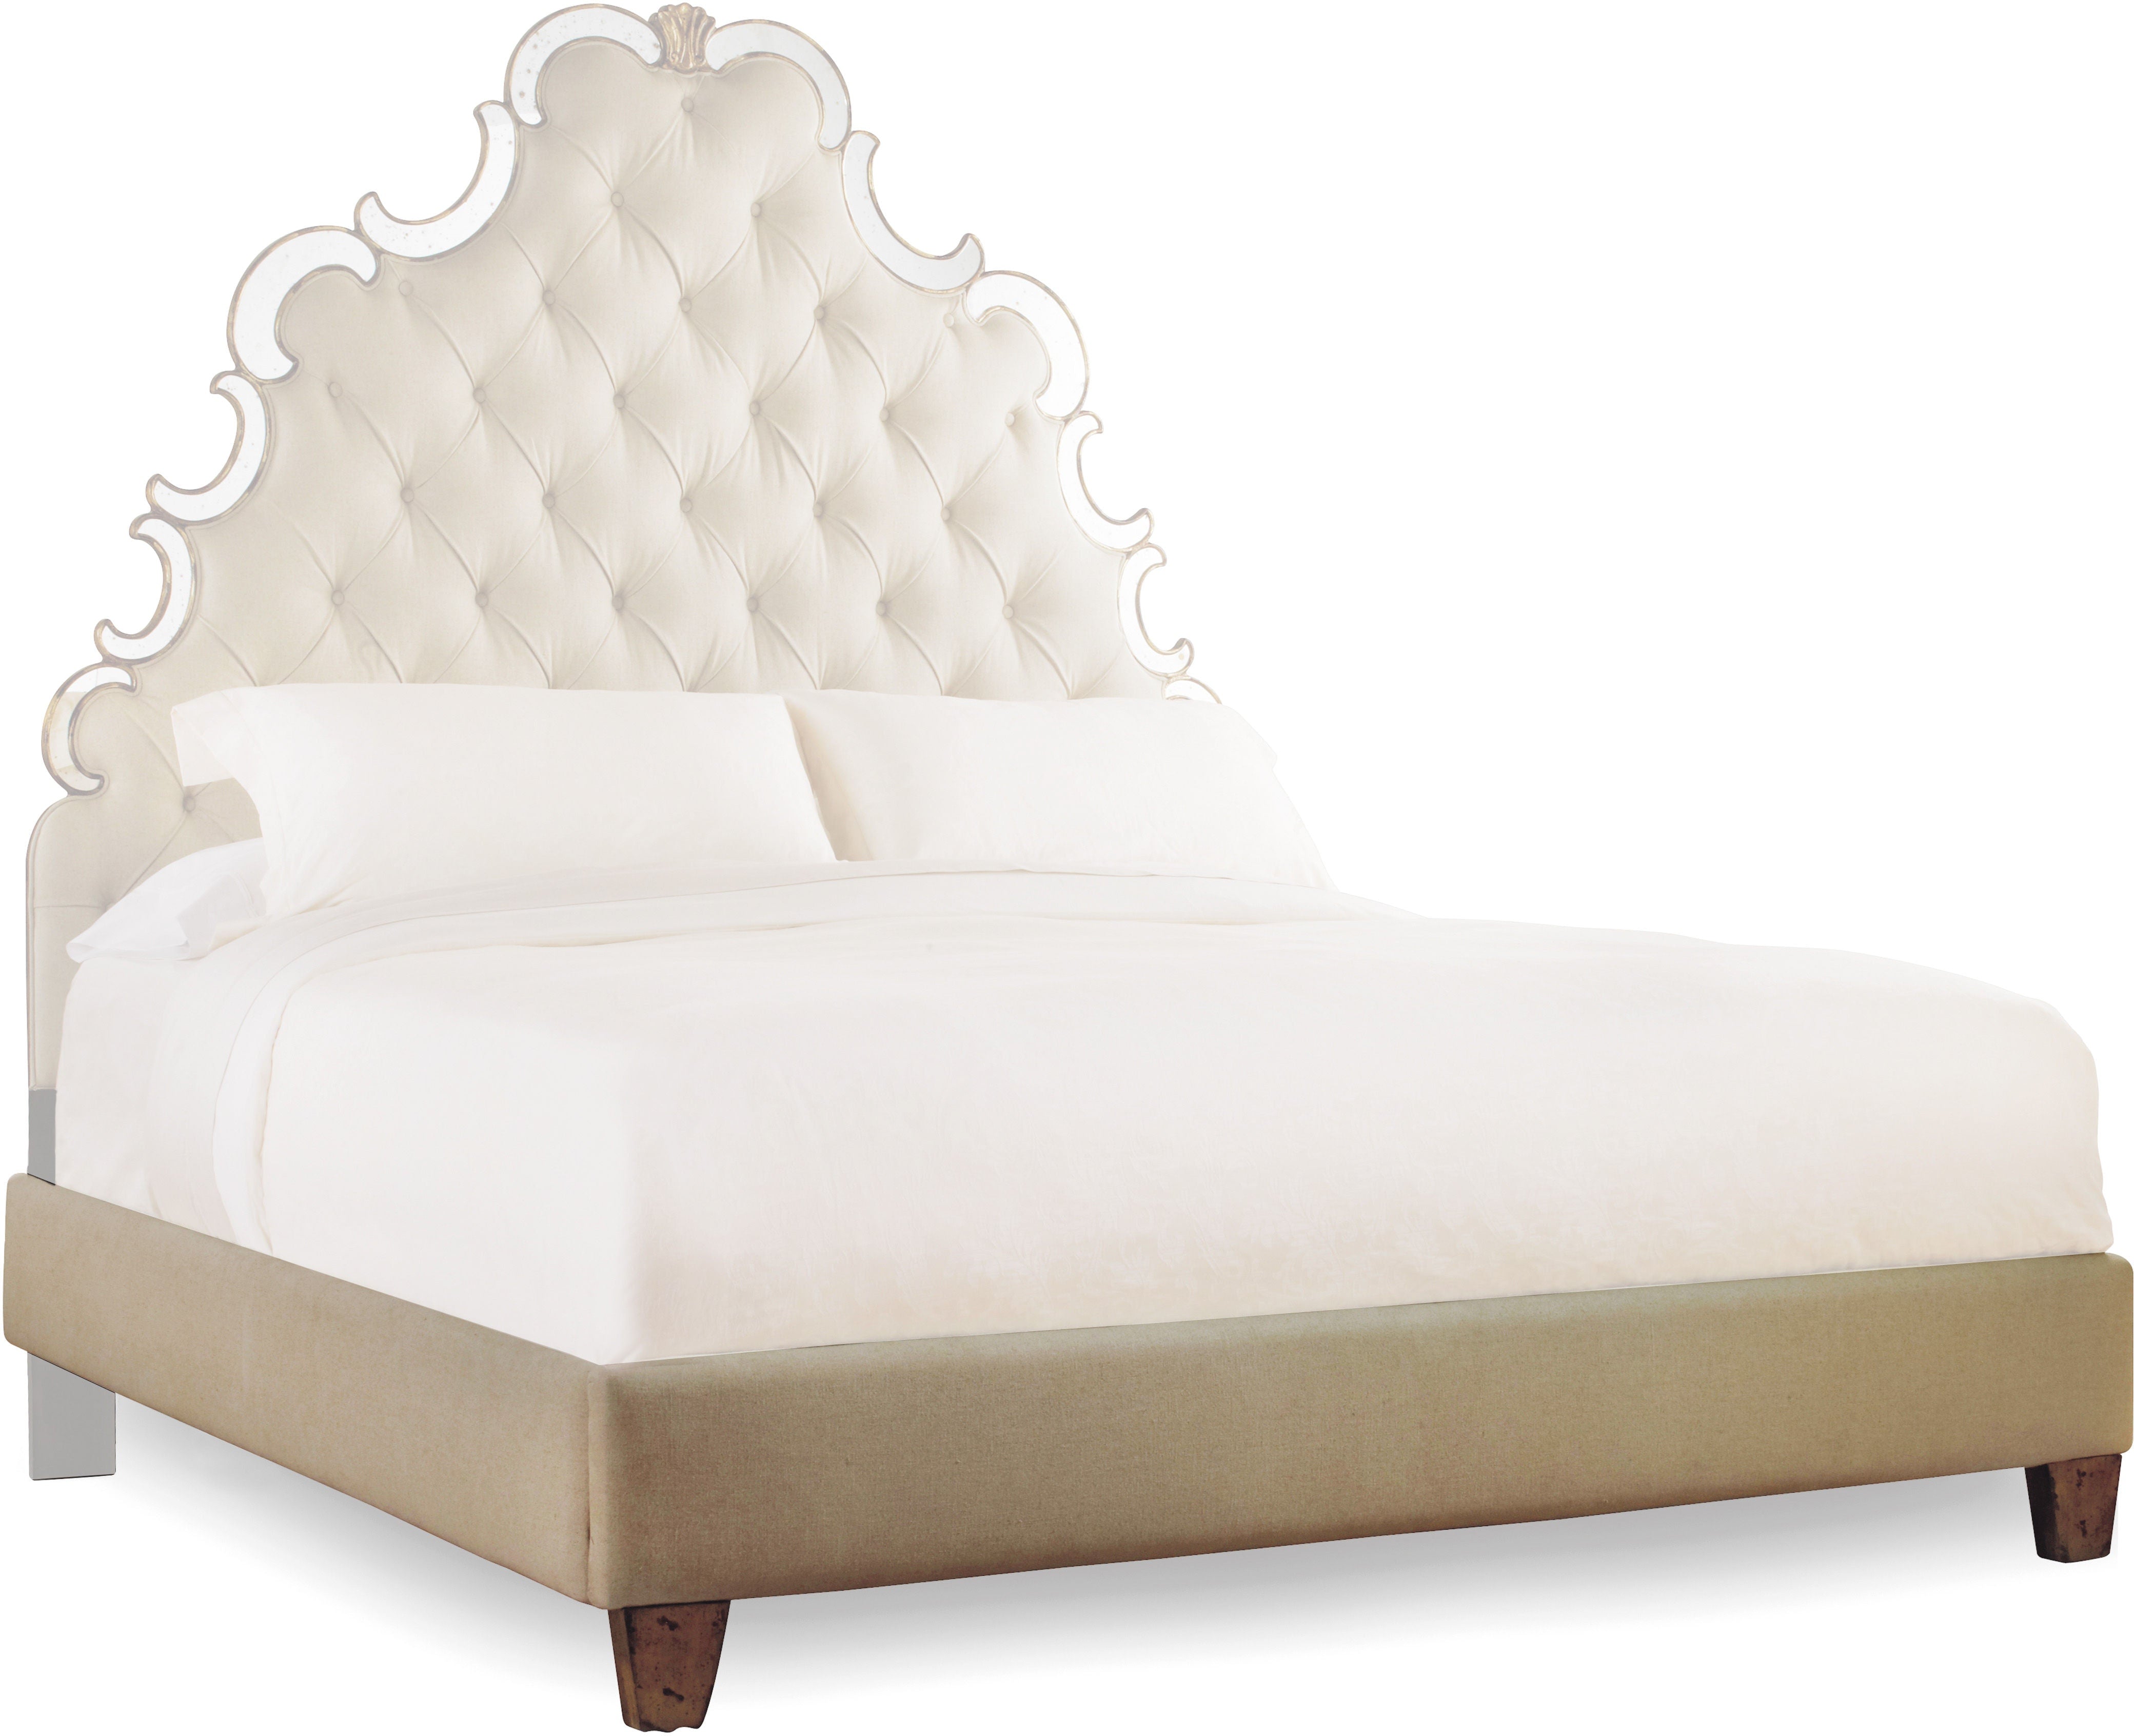 Hooker Furniture Bedroom Sanctuary California King Tufted Bed-Bling